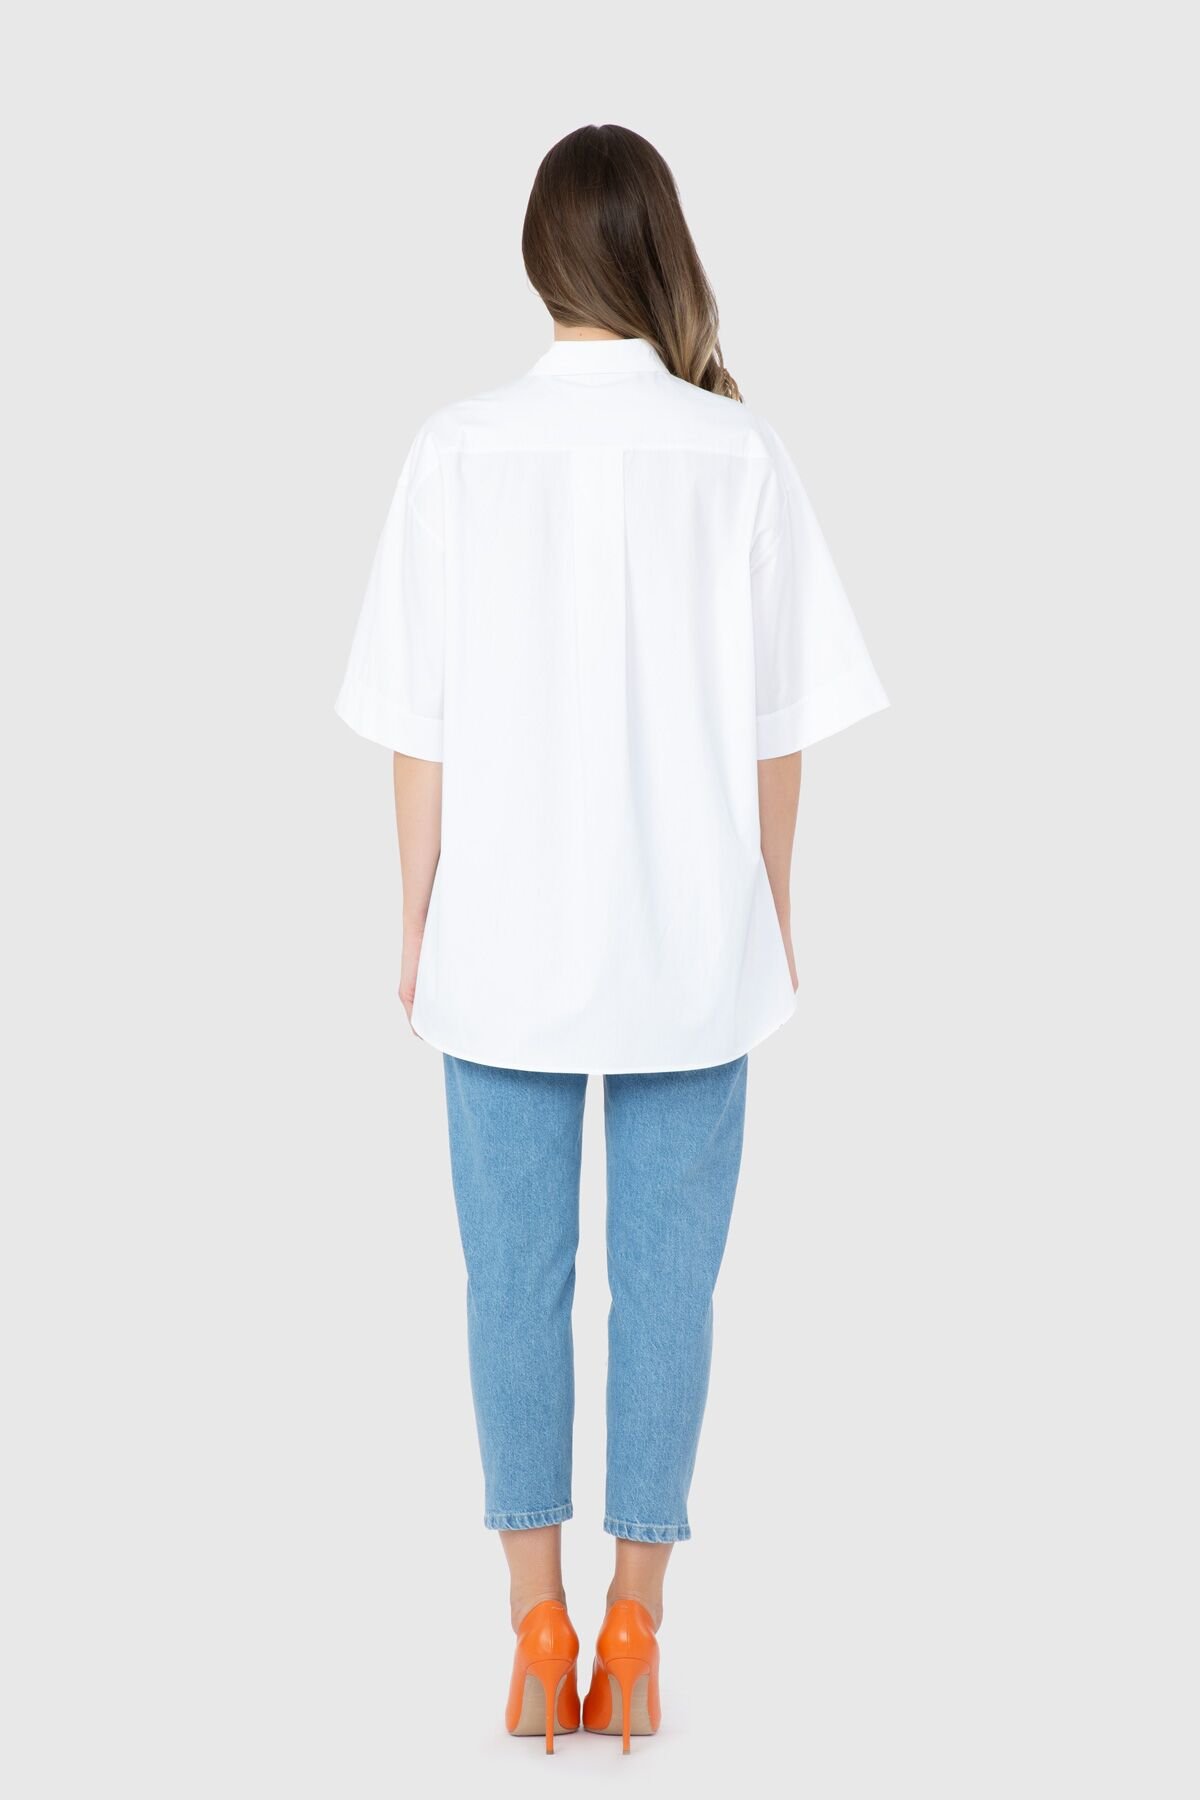 Asymmetrical Cut White Shirt